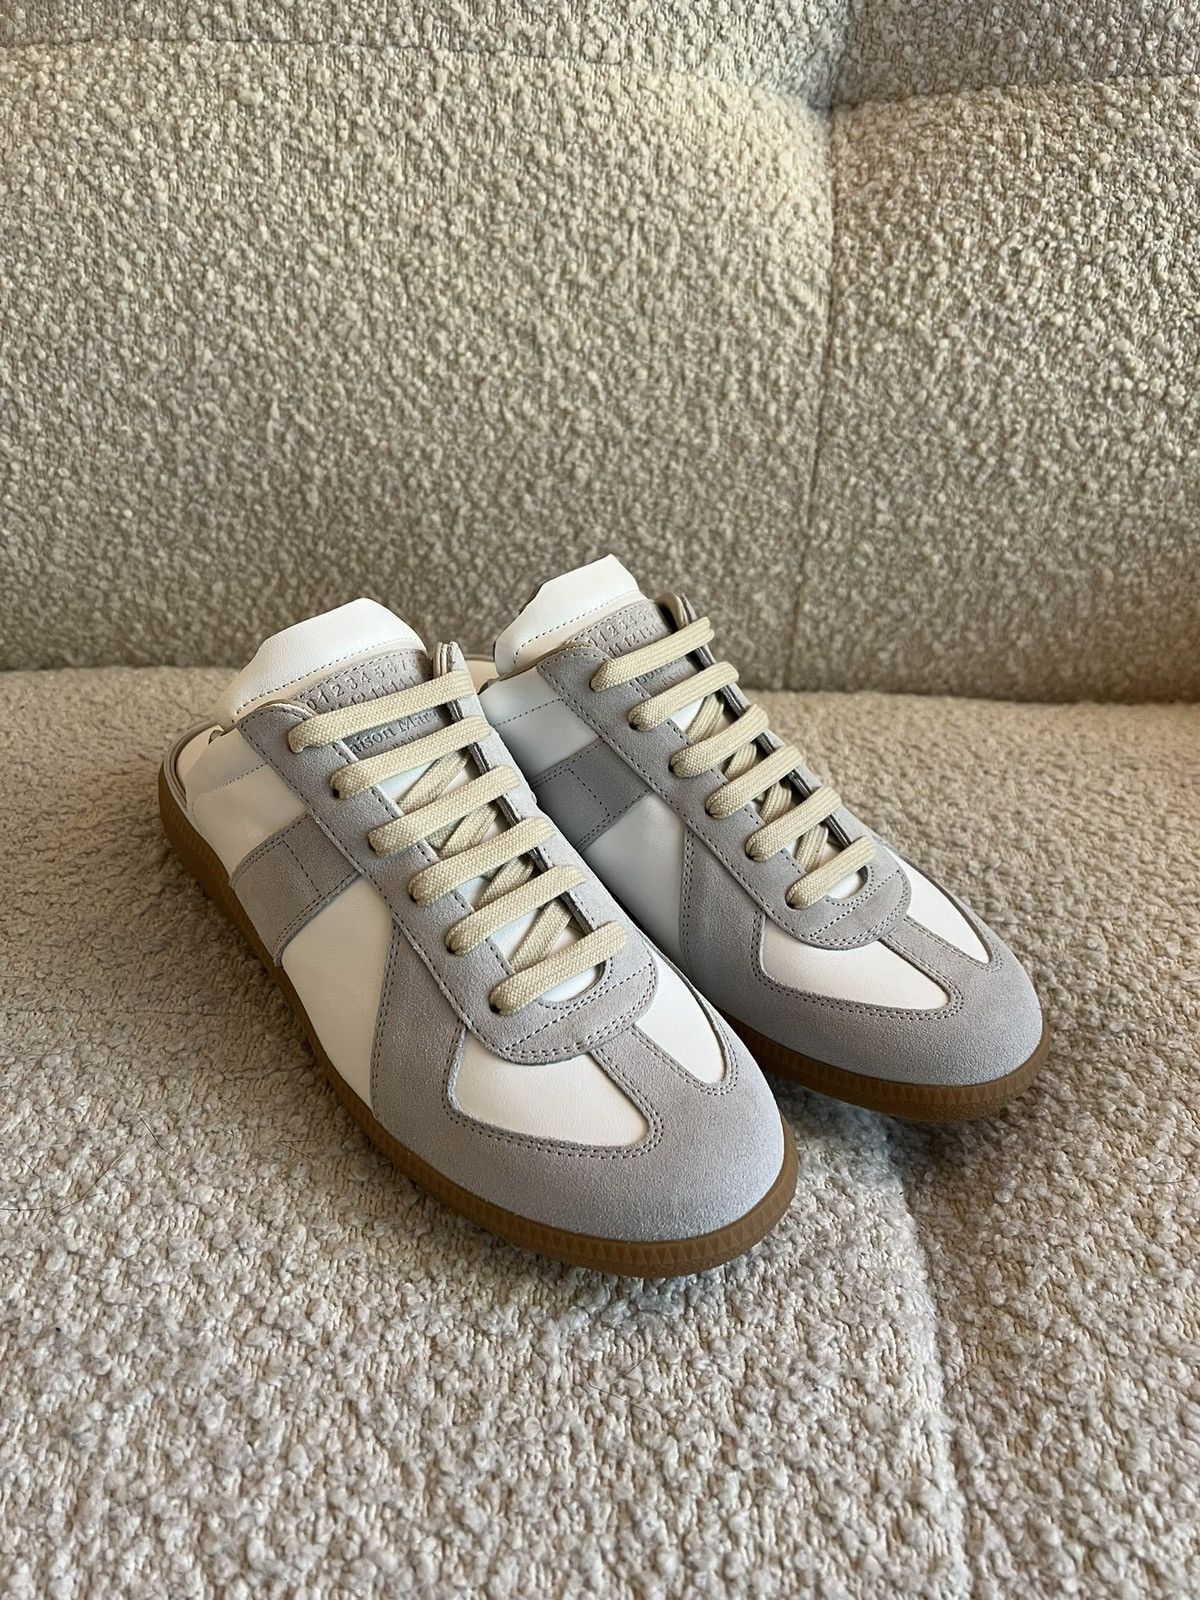 Vintage Maison Margiela Replica Mule Sneaker UK 10 Dirty White | Grailed